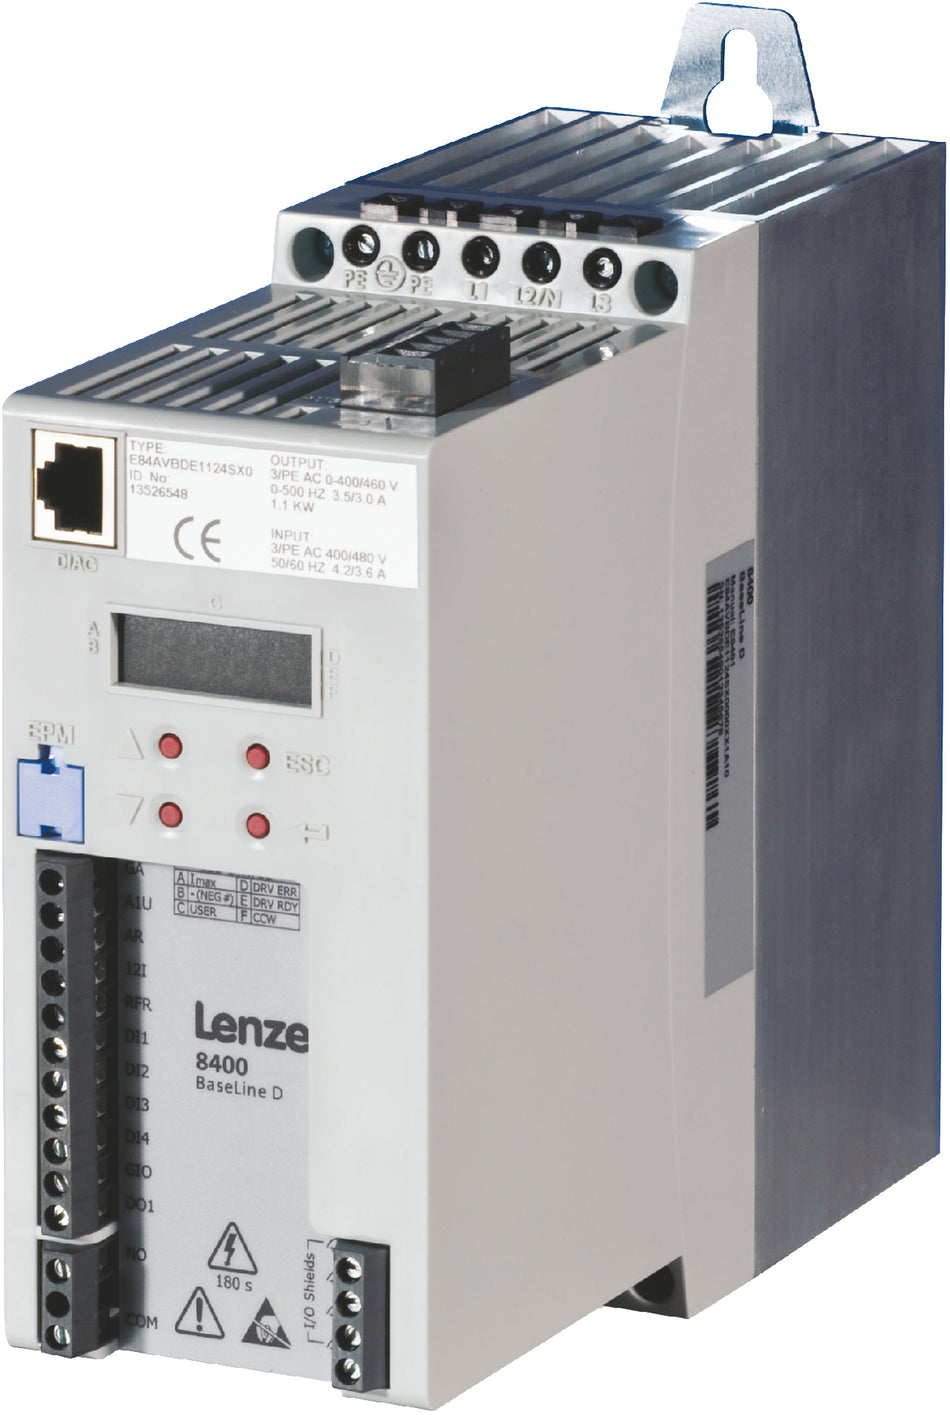 Lenze Inverter Drives 8400 BaseLine - E84AVBDE7514SX0XX3A34 0.75 kW